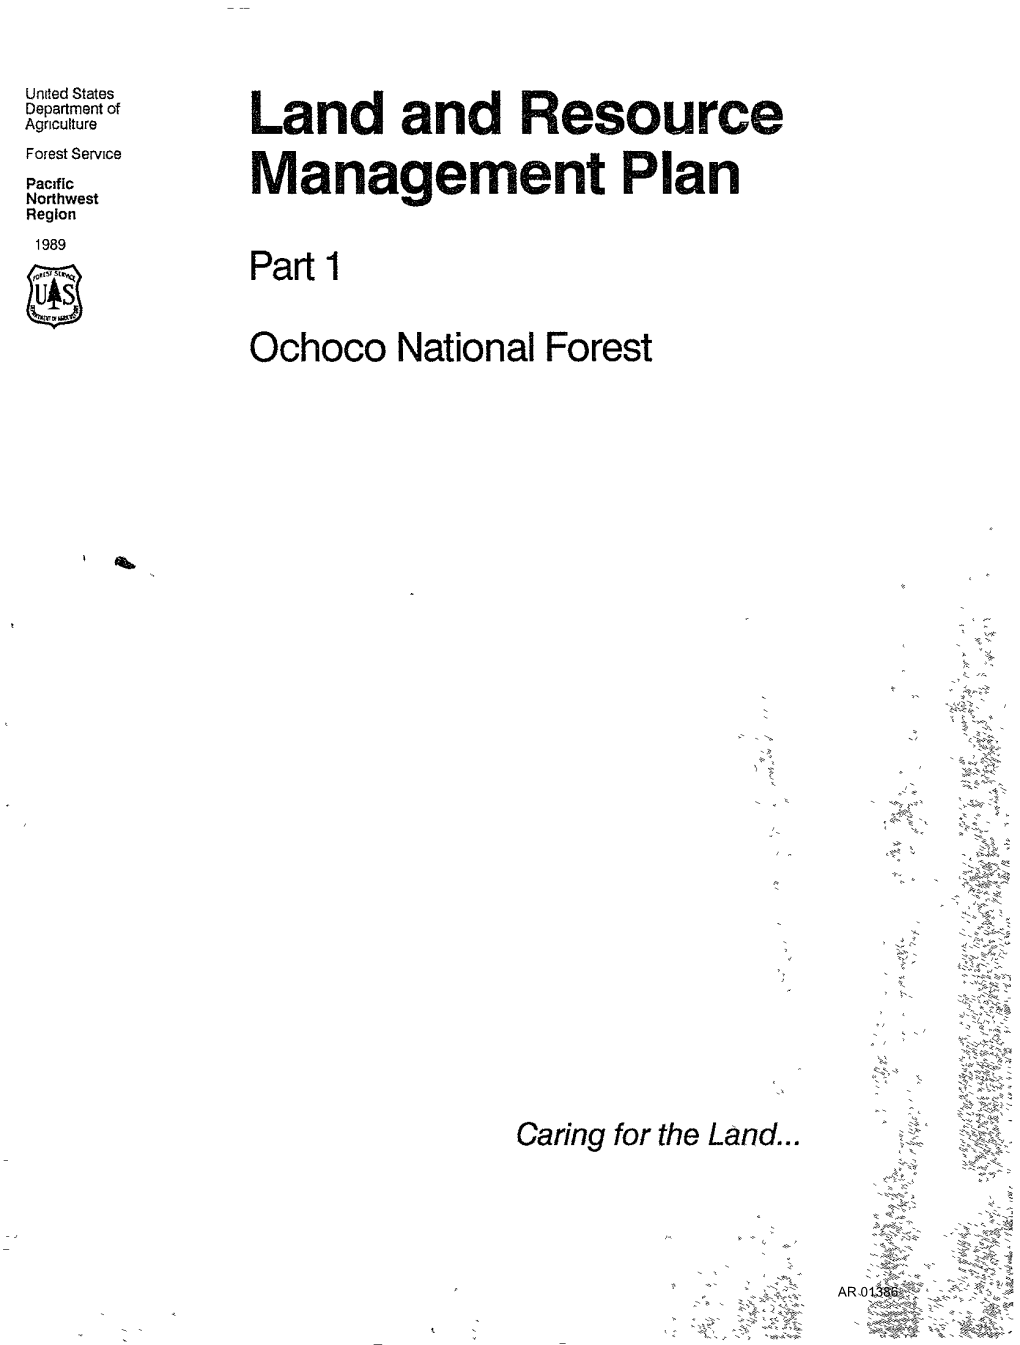 Part 1 Ochoco National Forest